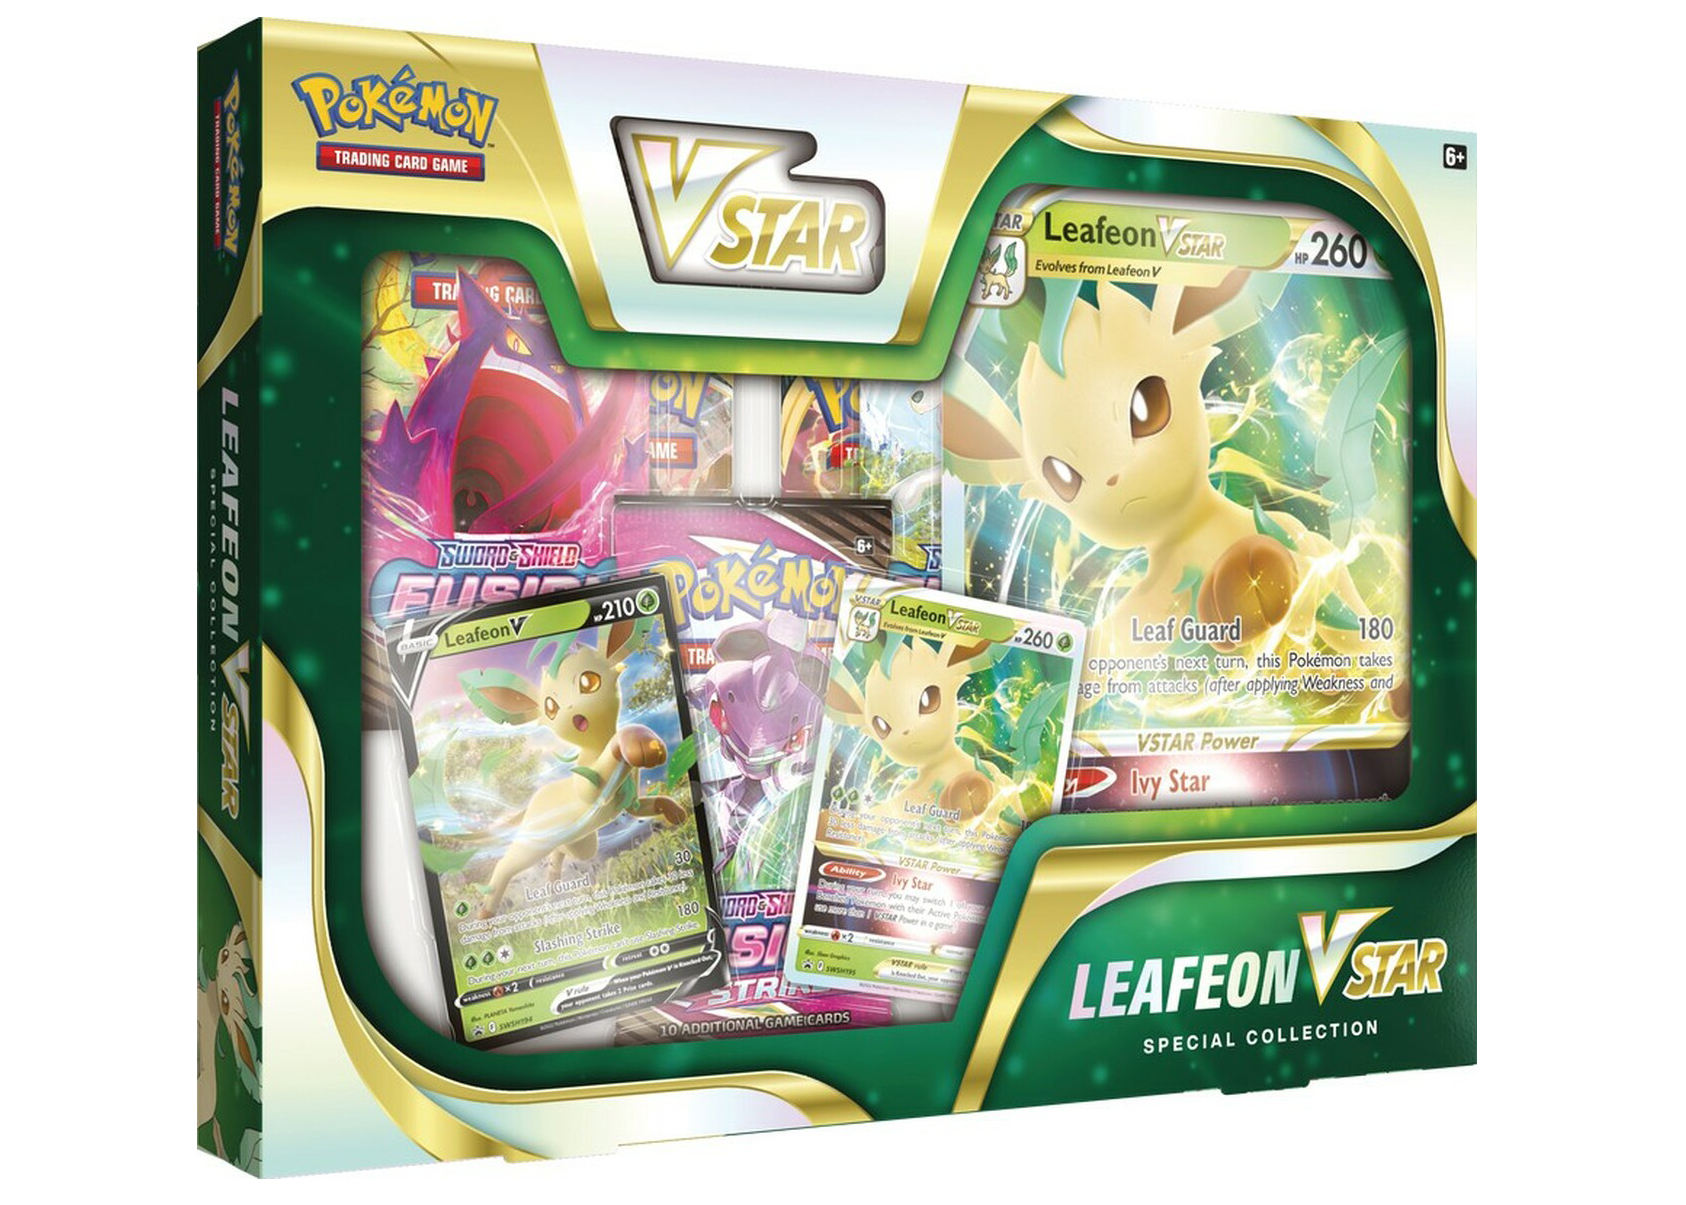 Pokémon TCG Sword & Shield Leafeon VSTAR Special Collection Box - US